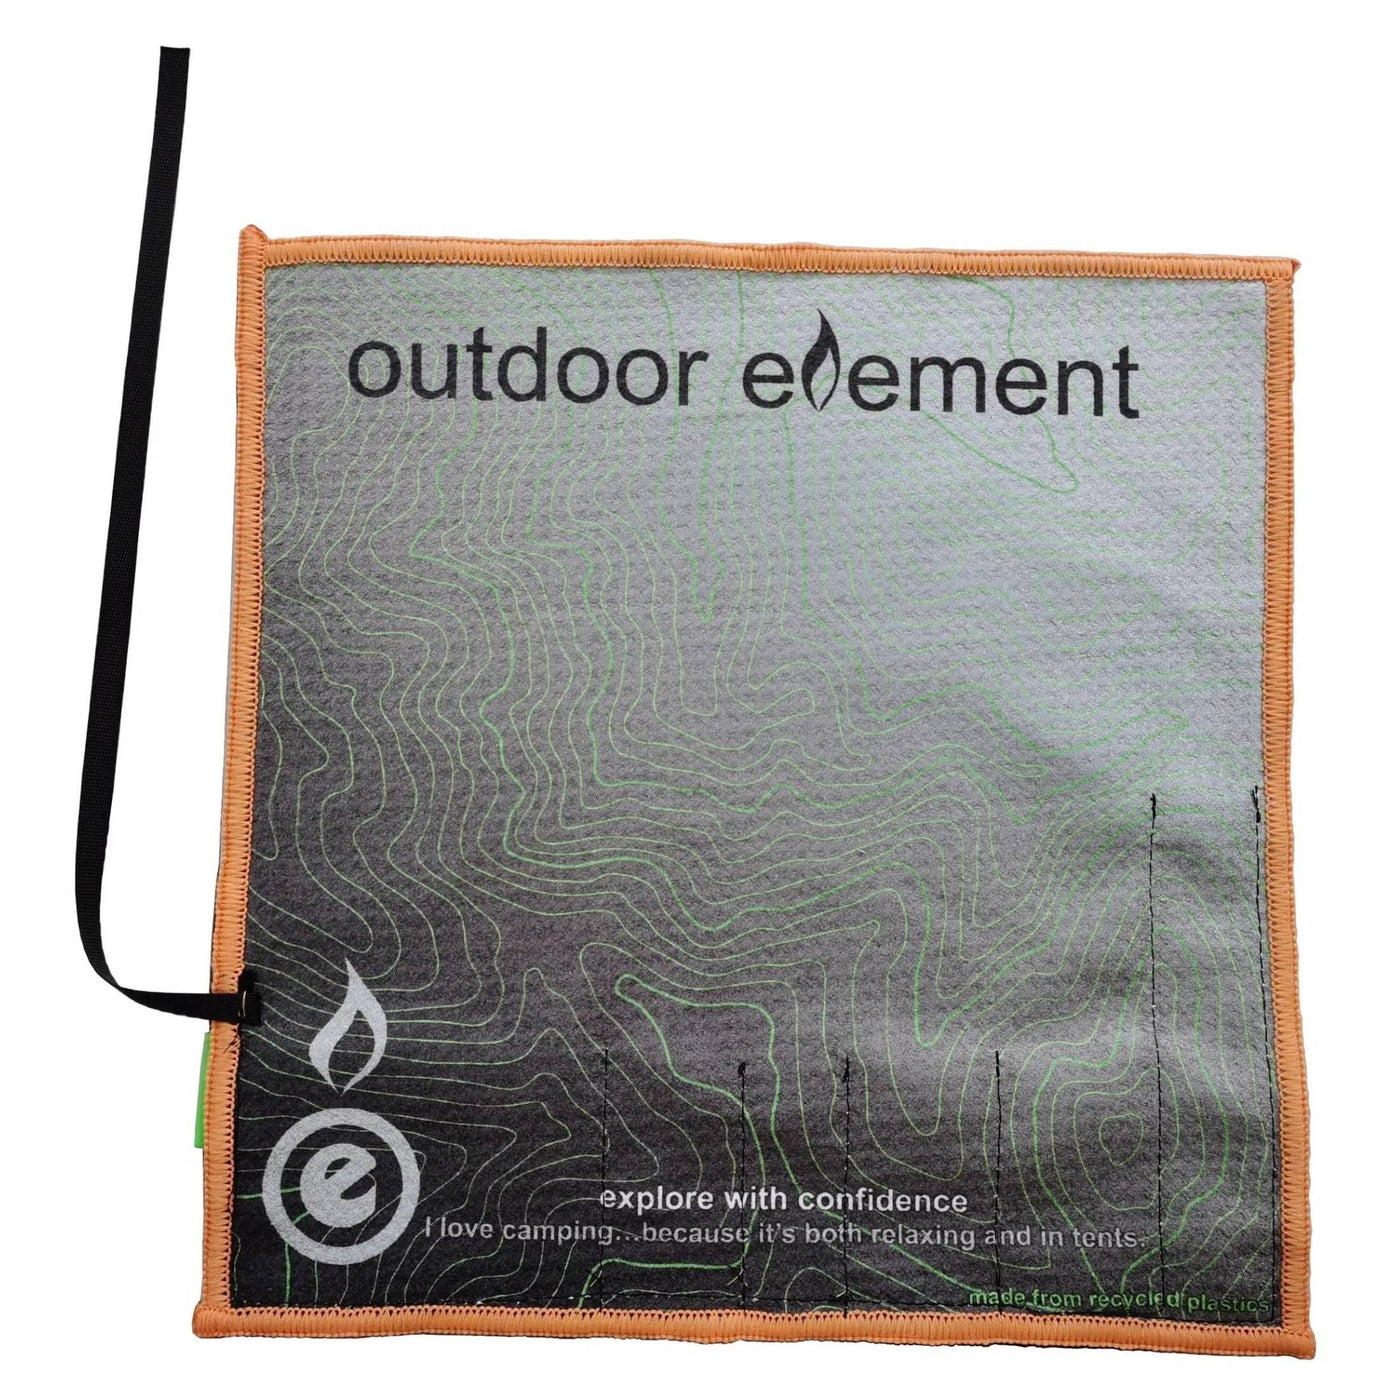 Outdoor Element Omni-Tensil | Camp Kitchen NZ  | Further Faster Christchurch NZ